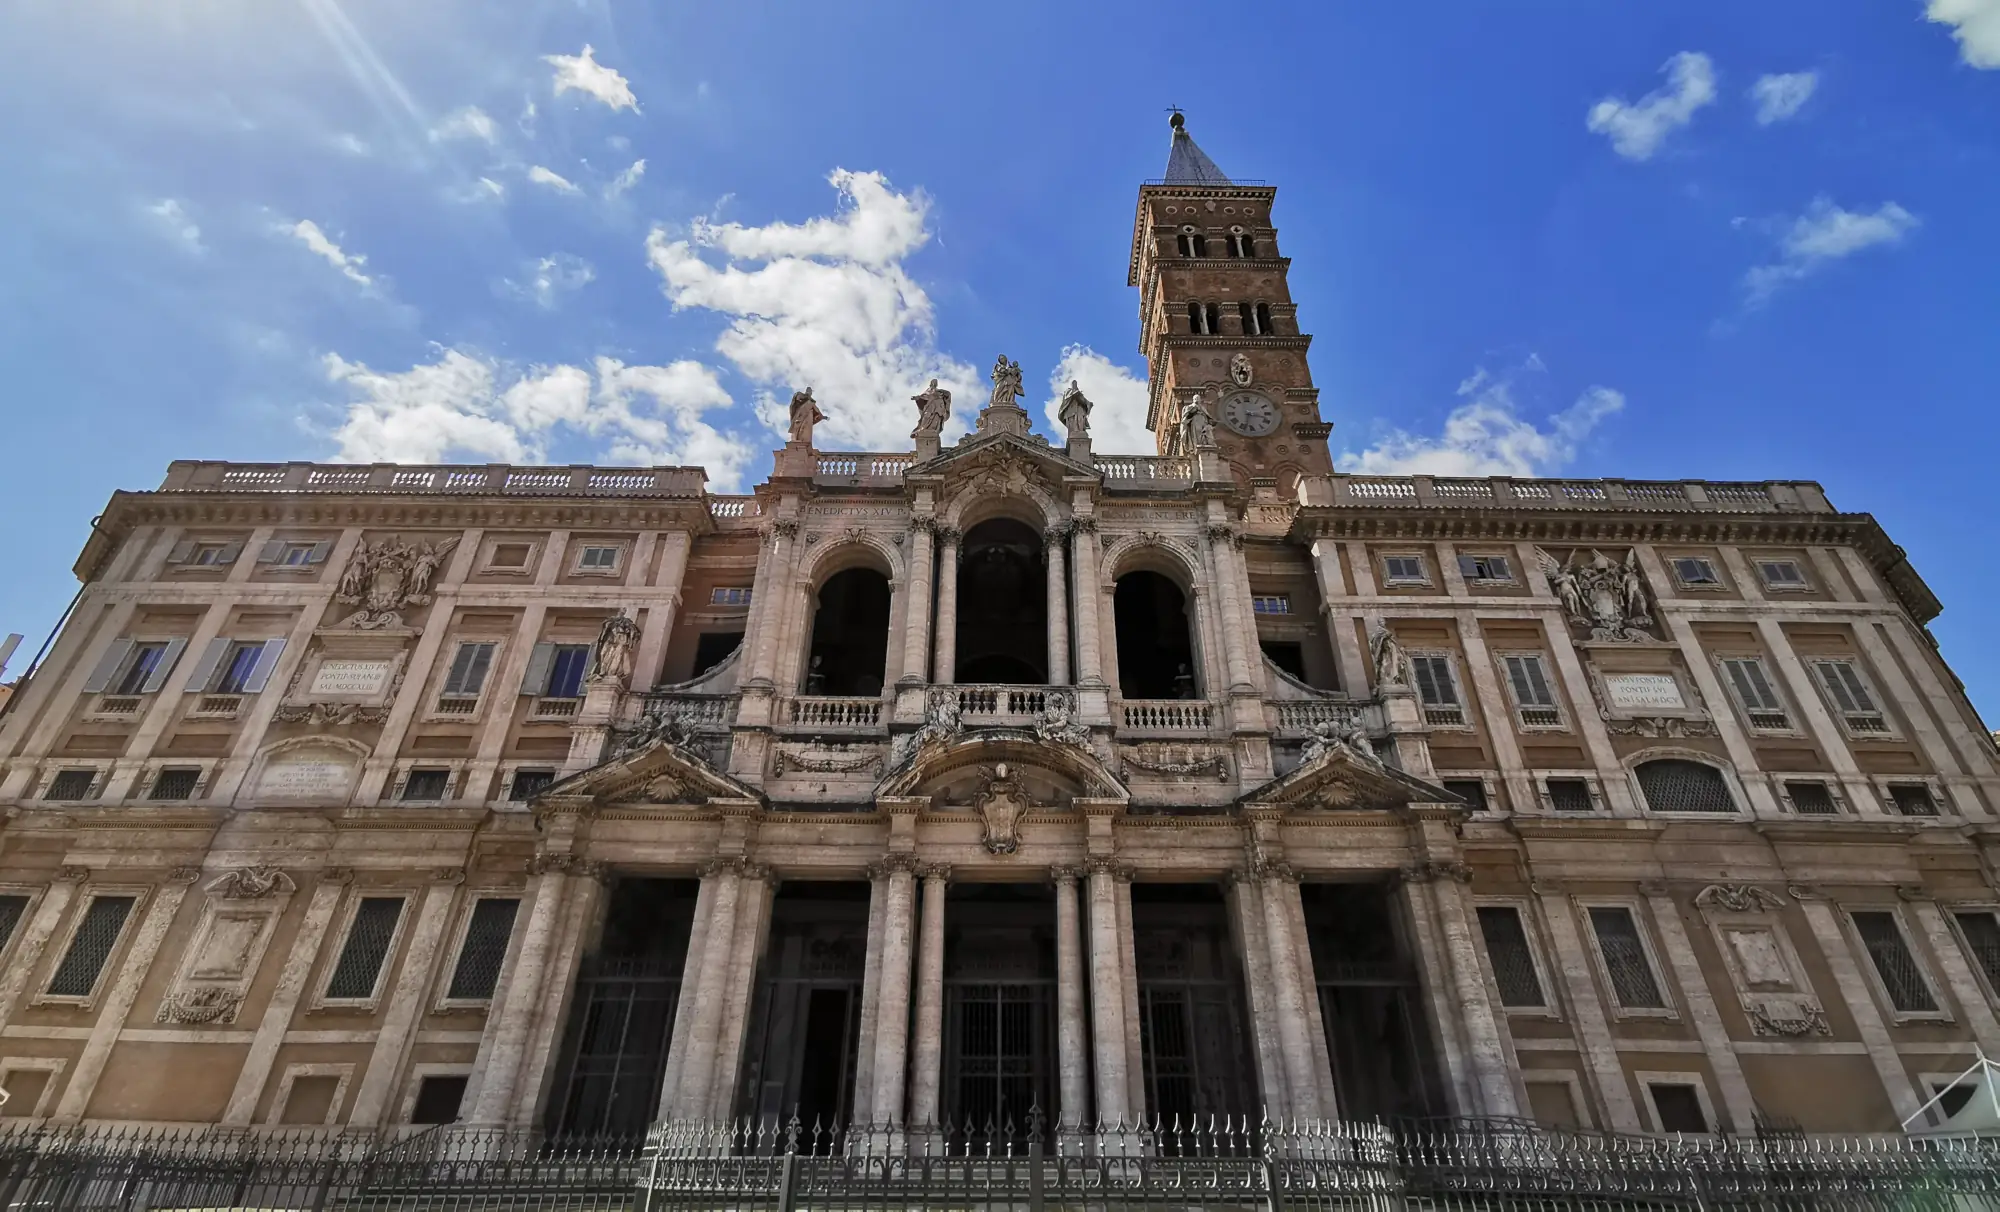 Basílica de Santa María Mayor, historia e información - Guía En Roma